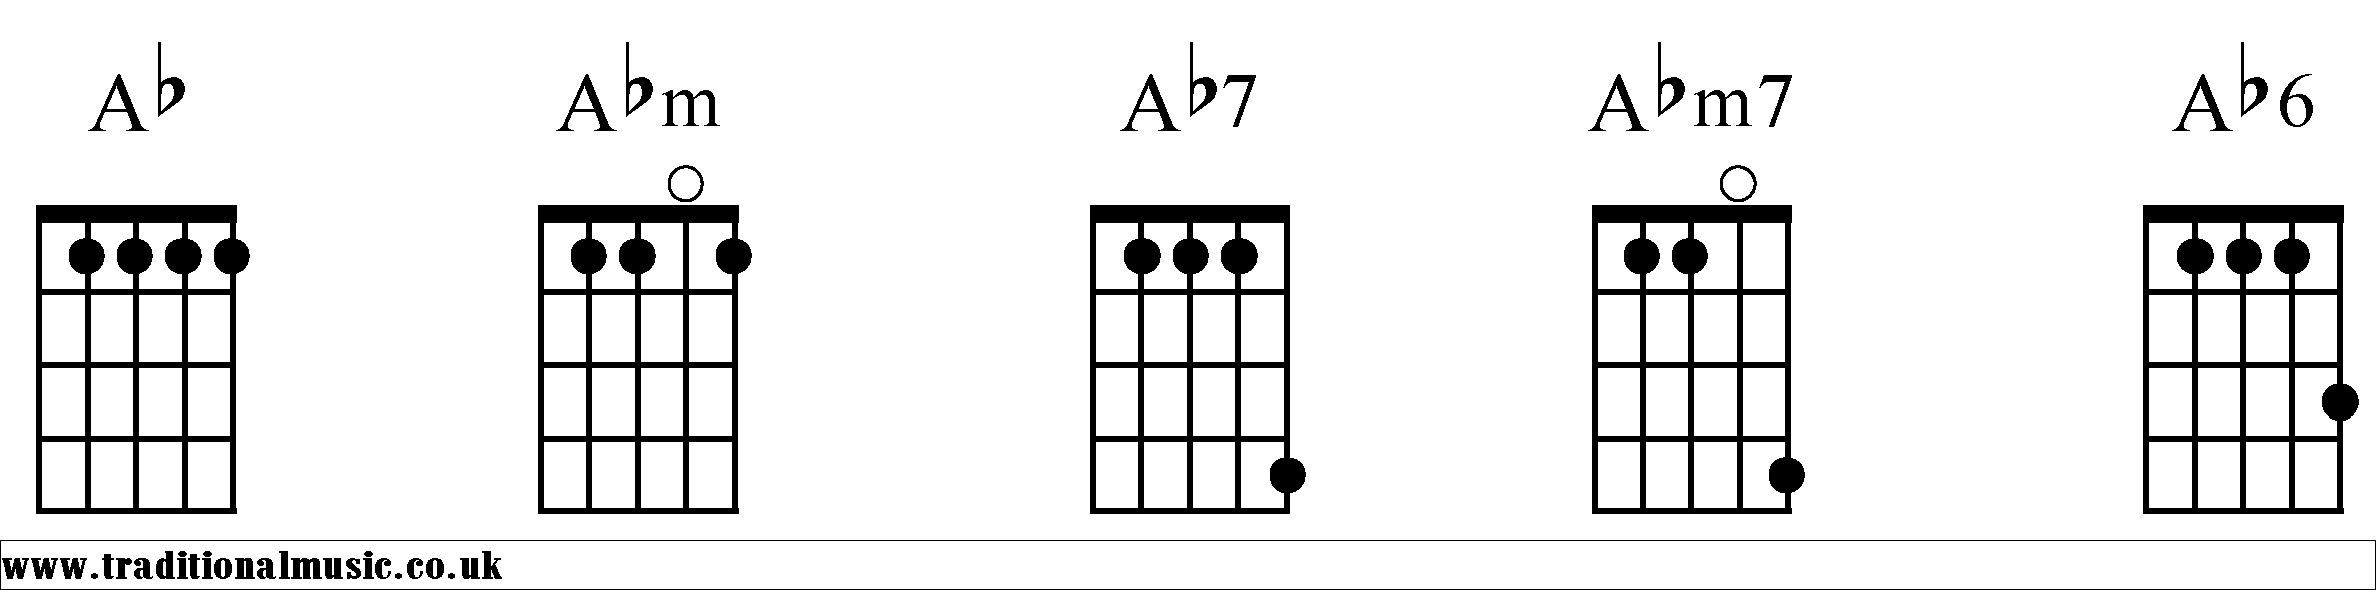 Ab Chords diagrams Banjo 1